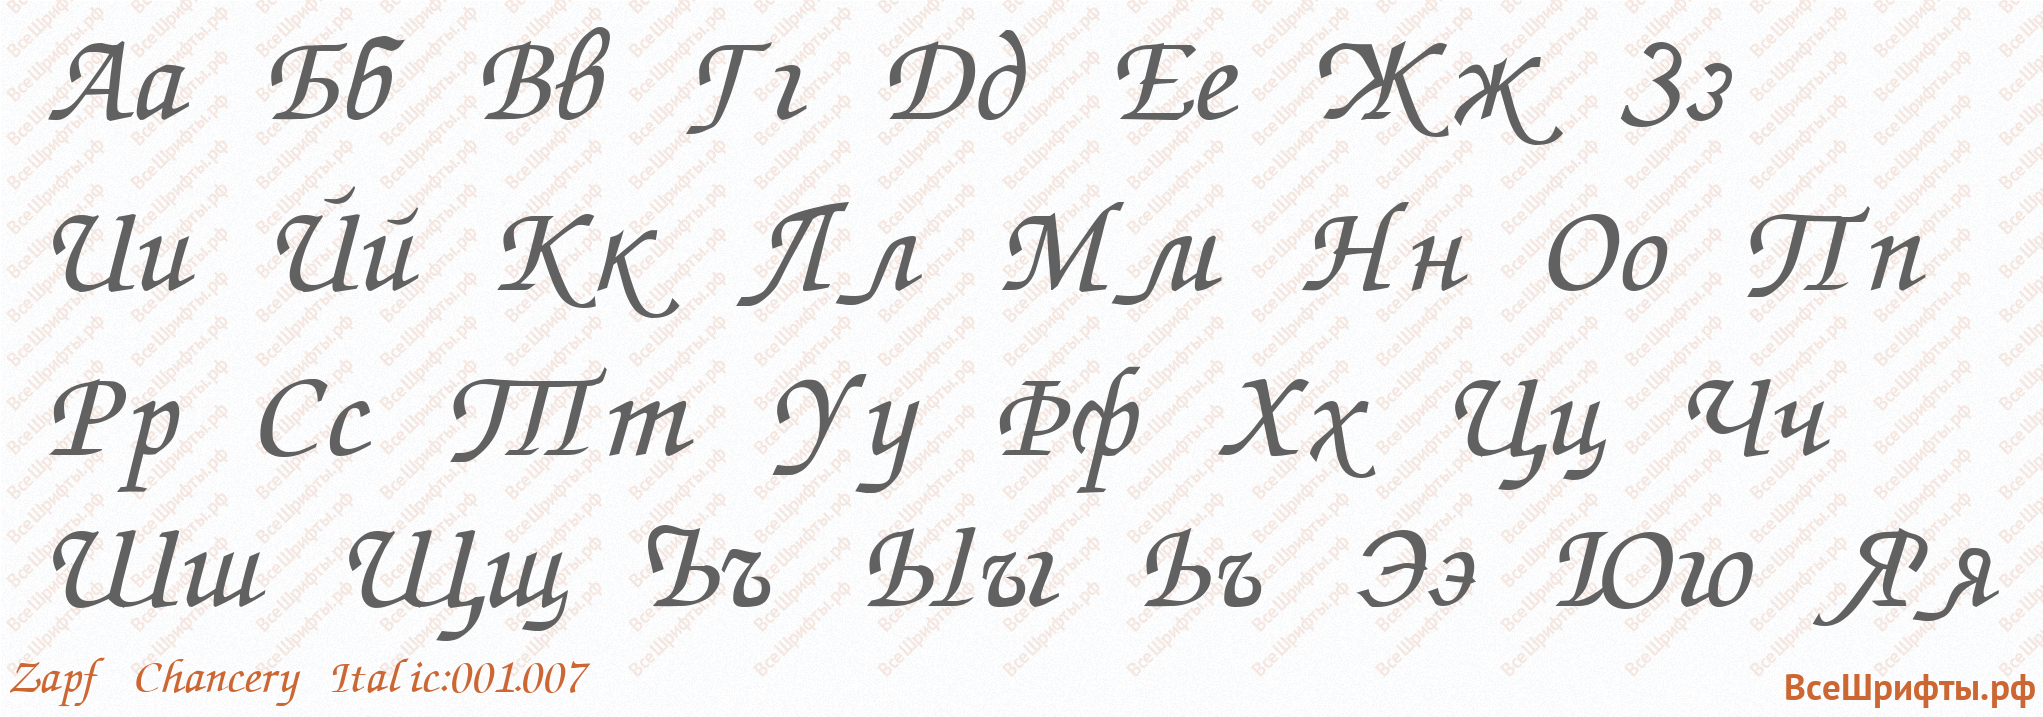 Шрифт Zapf Chancery Italic:001.007 с русскими буквами